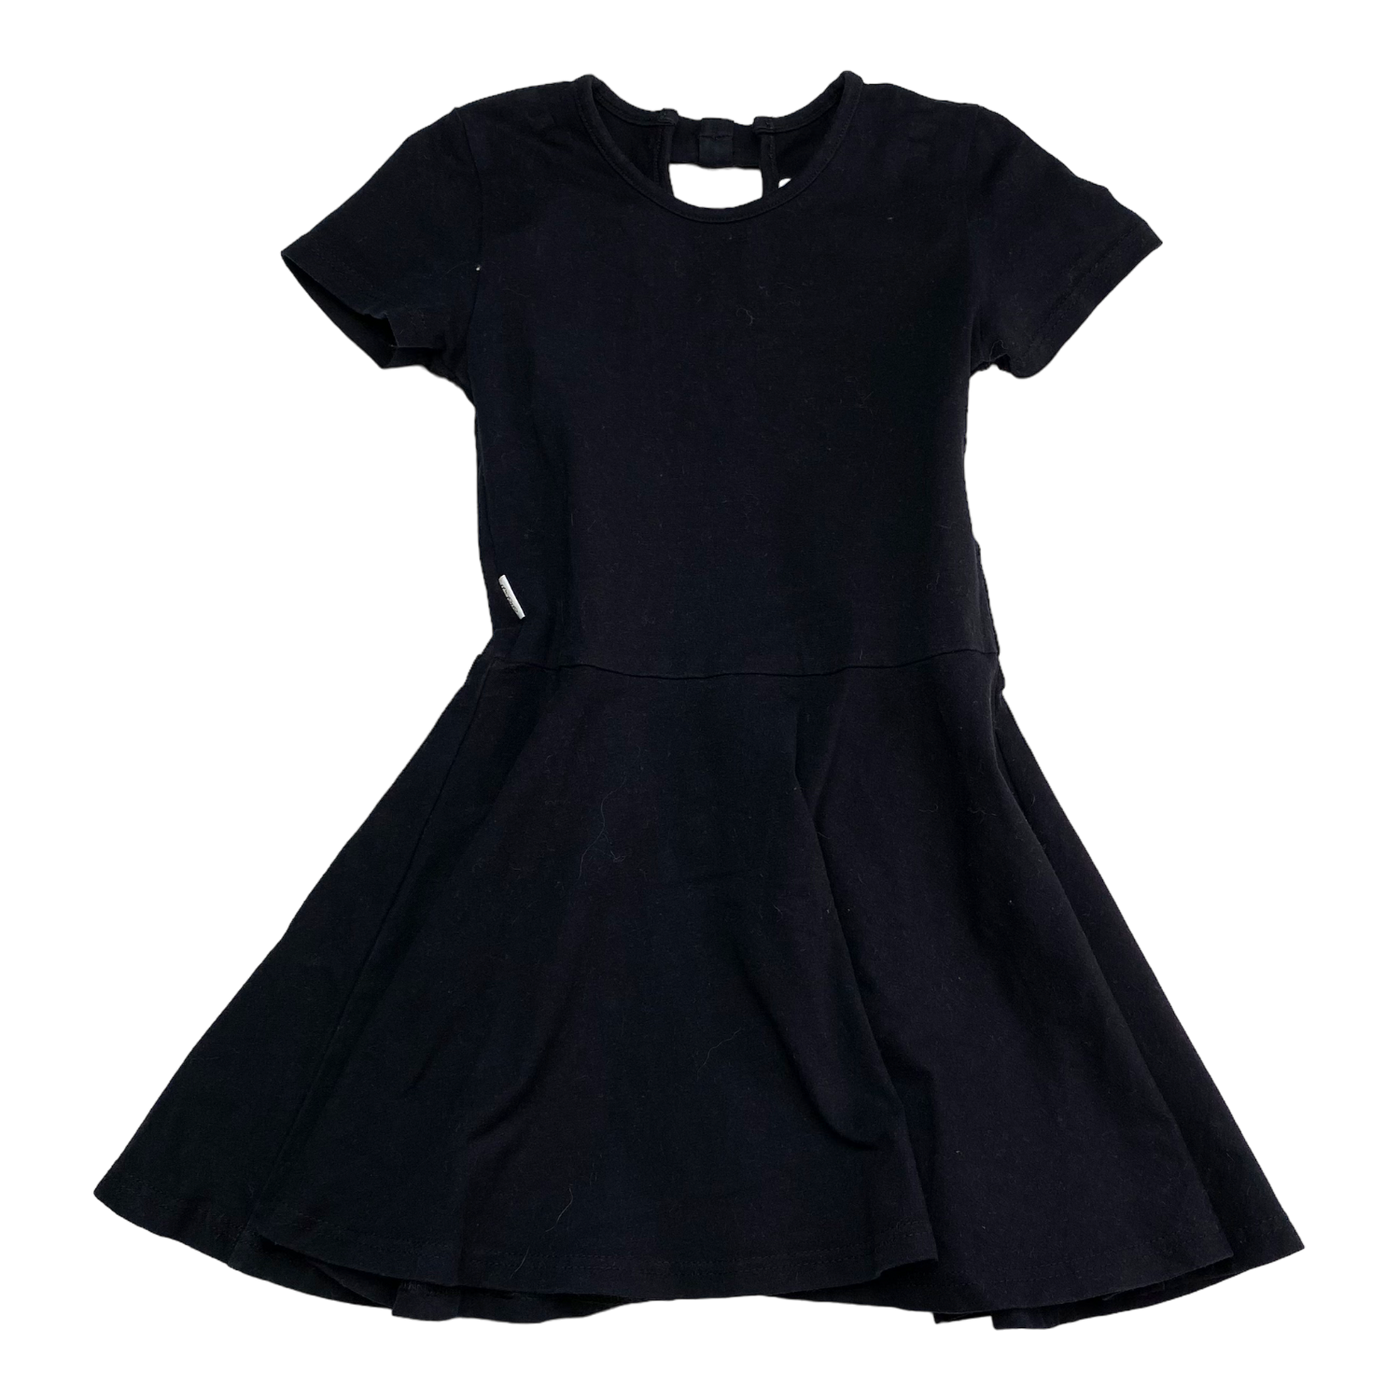 Gugguu tricot dress, black | 110cm